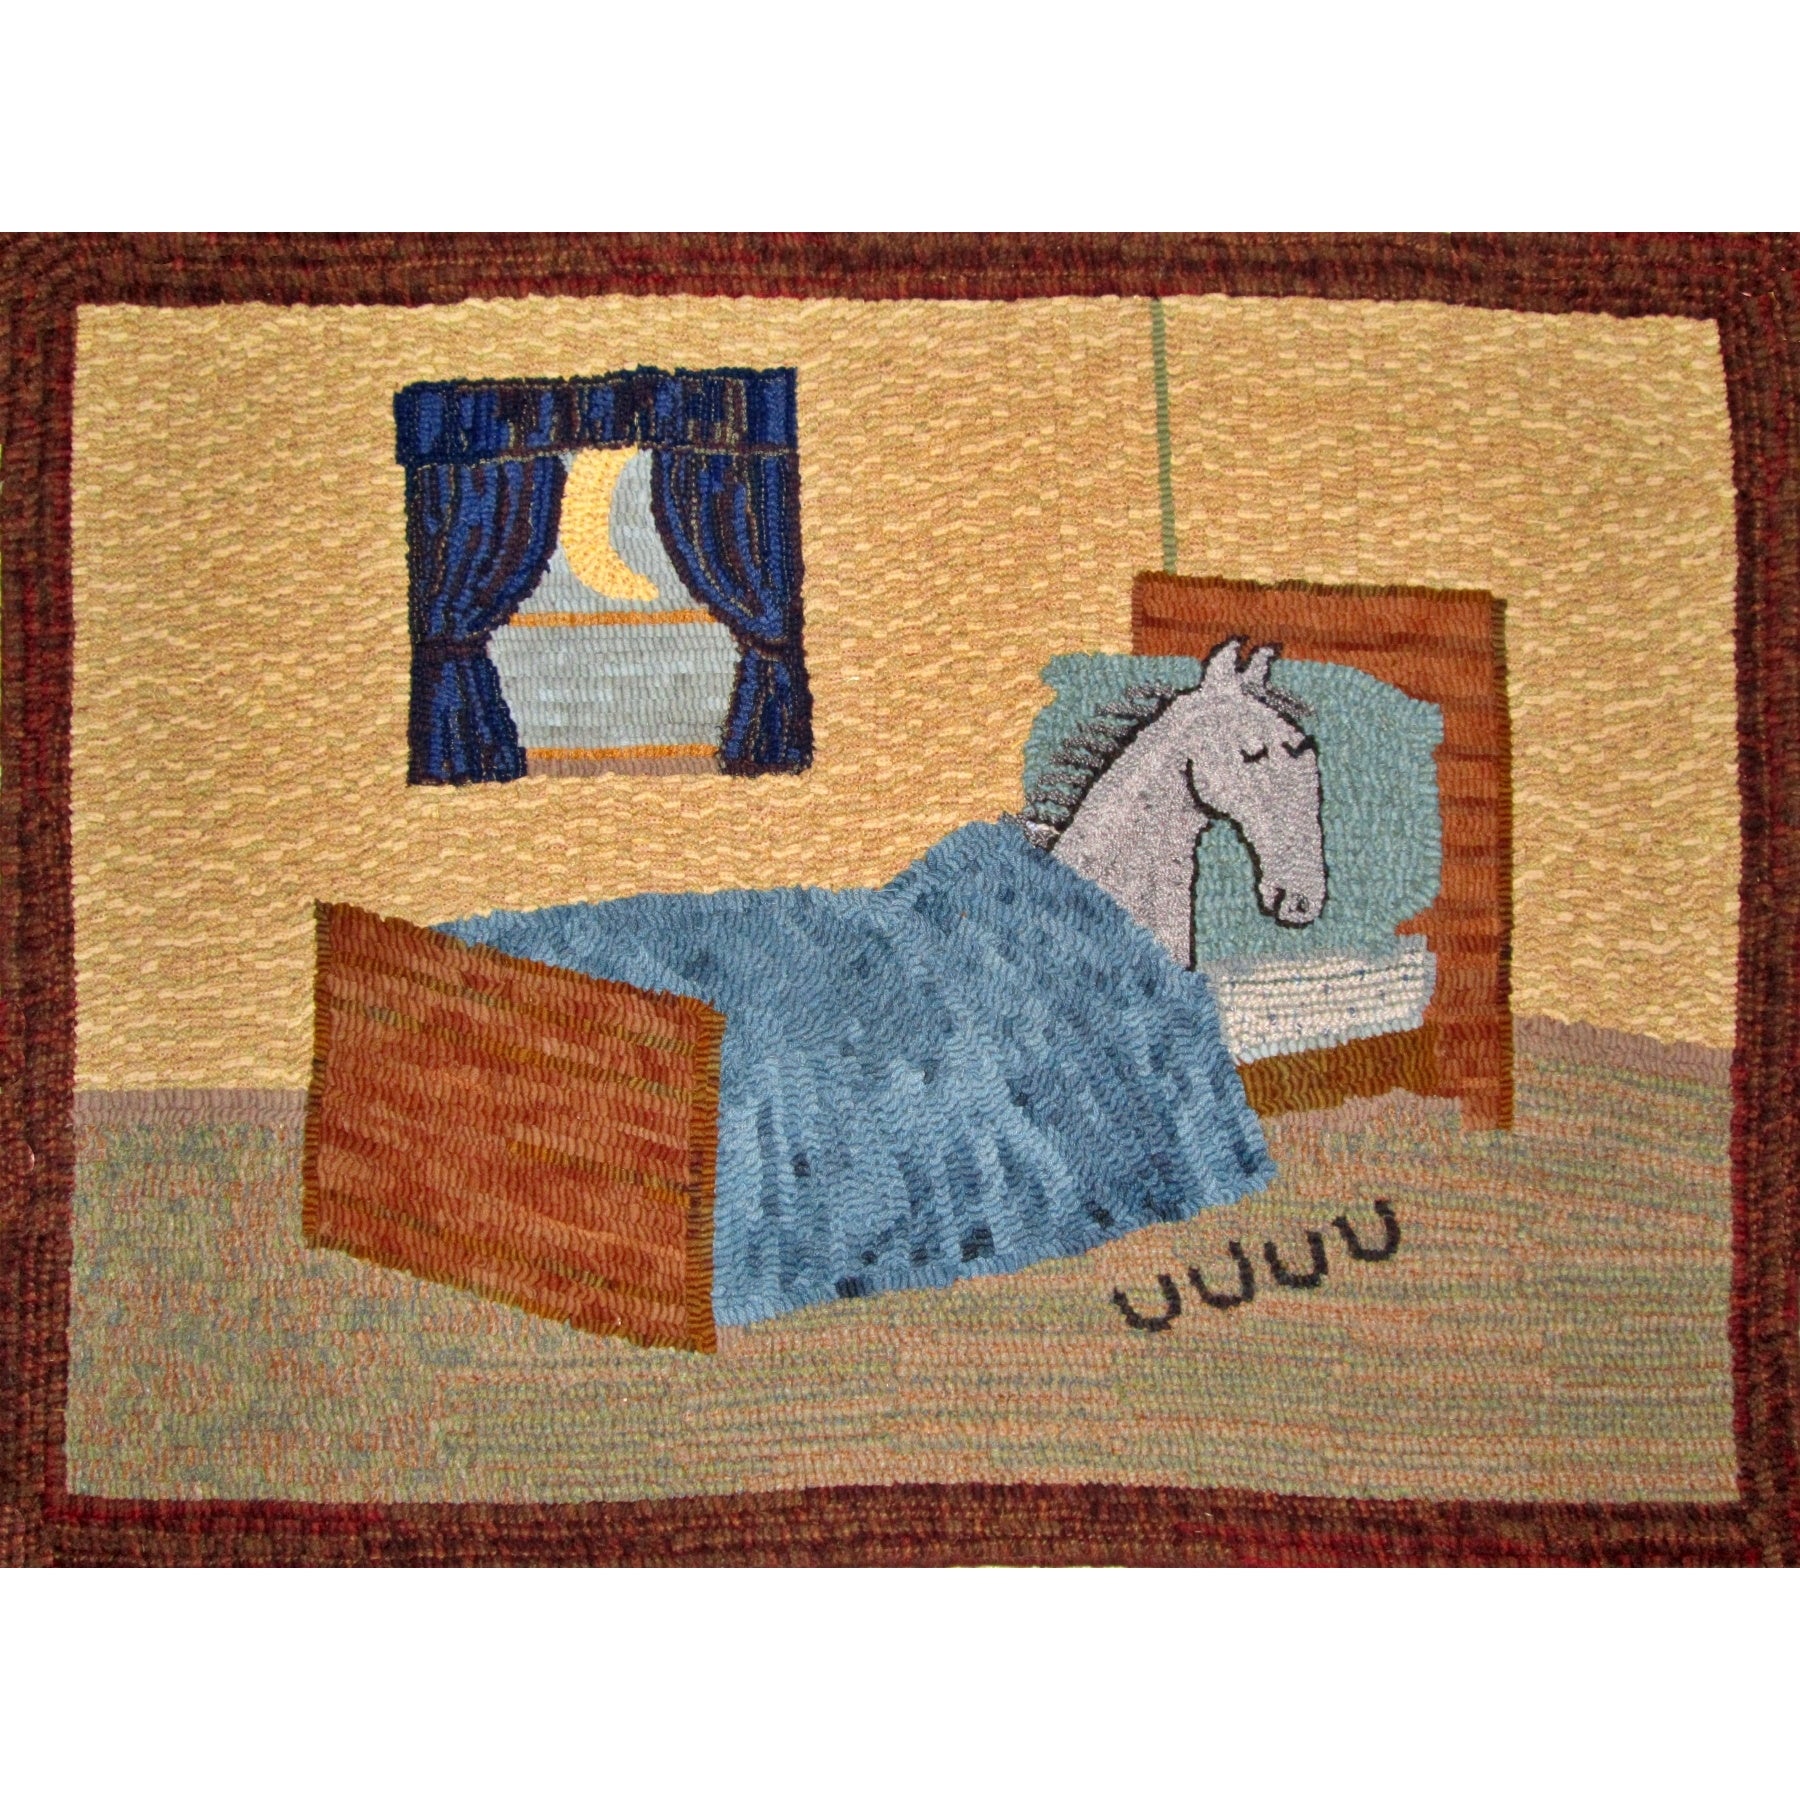 Sweet Dreams, rug hooked by Connie Bradley